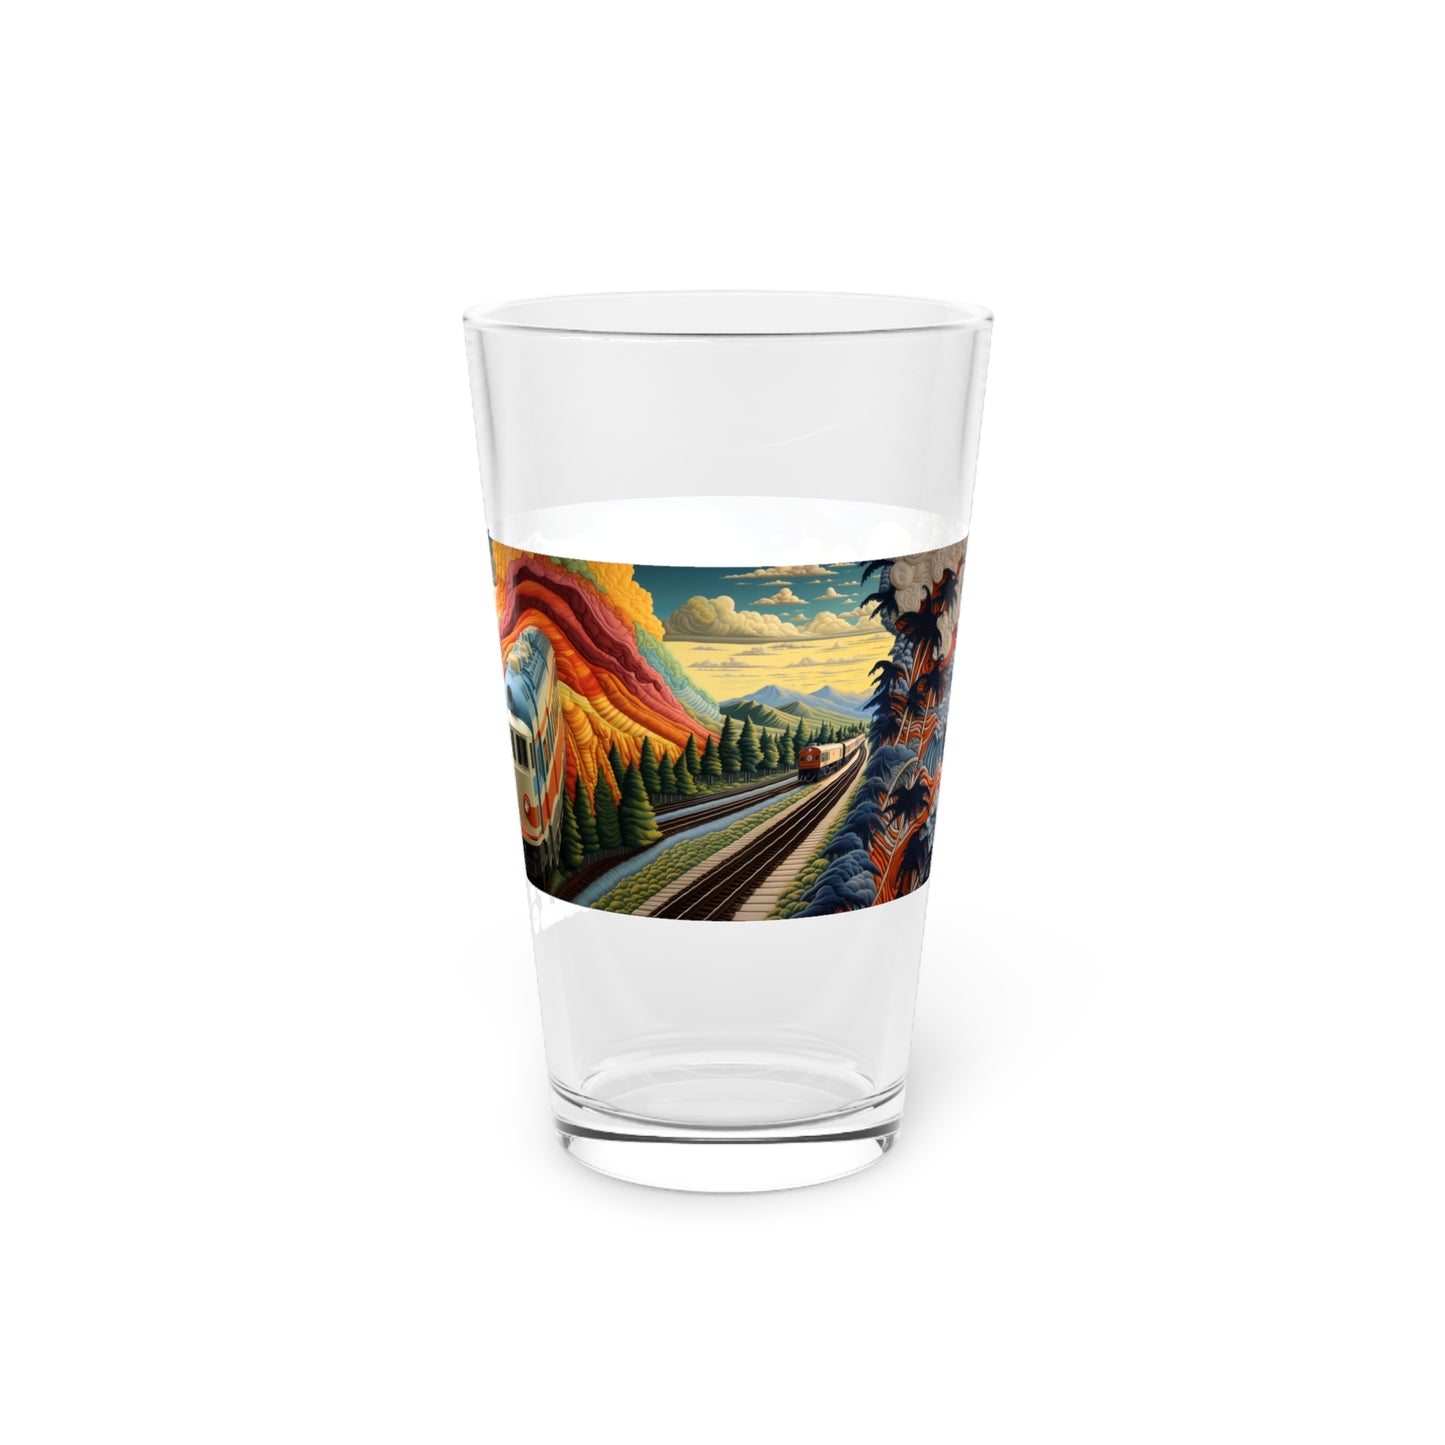 16oz Glass with Vibrant Train Art - Stashbox Train Collection